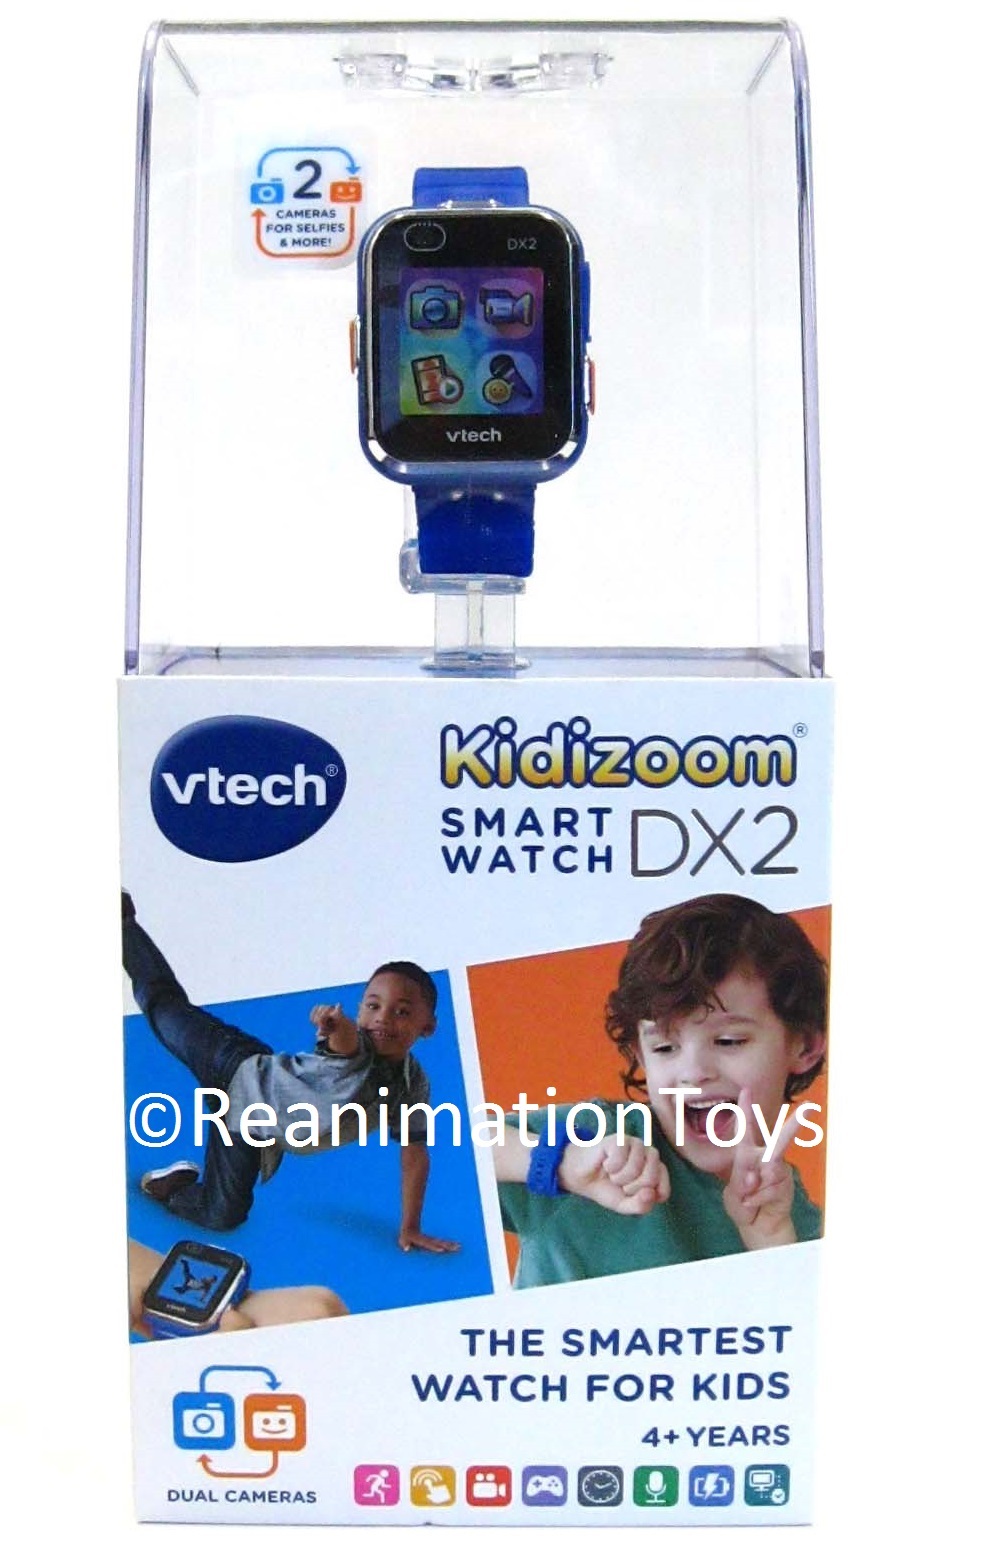 VTech Kidizoom DX2 Blue Smart Watch Camera Video Game Apps Brand New Sealed NIB - $79.99